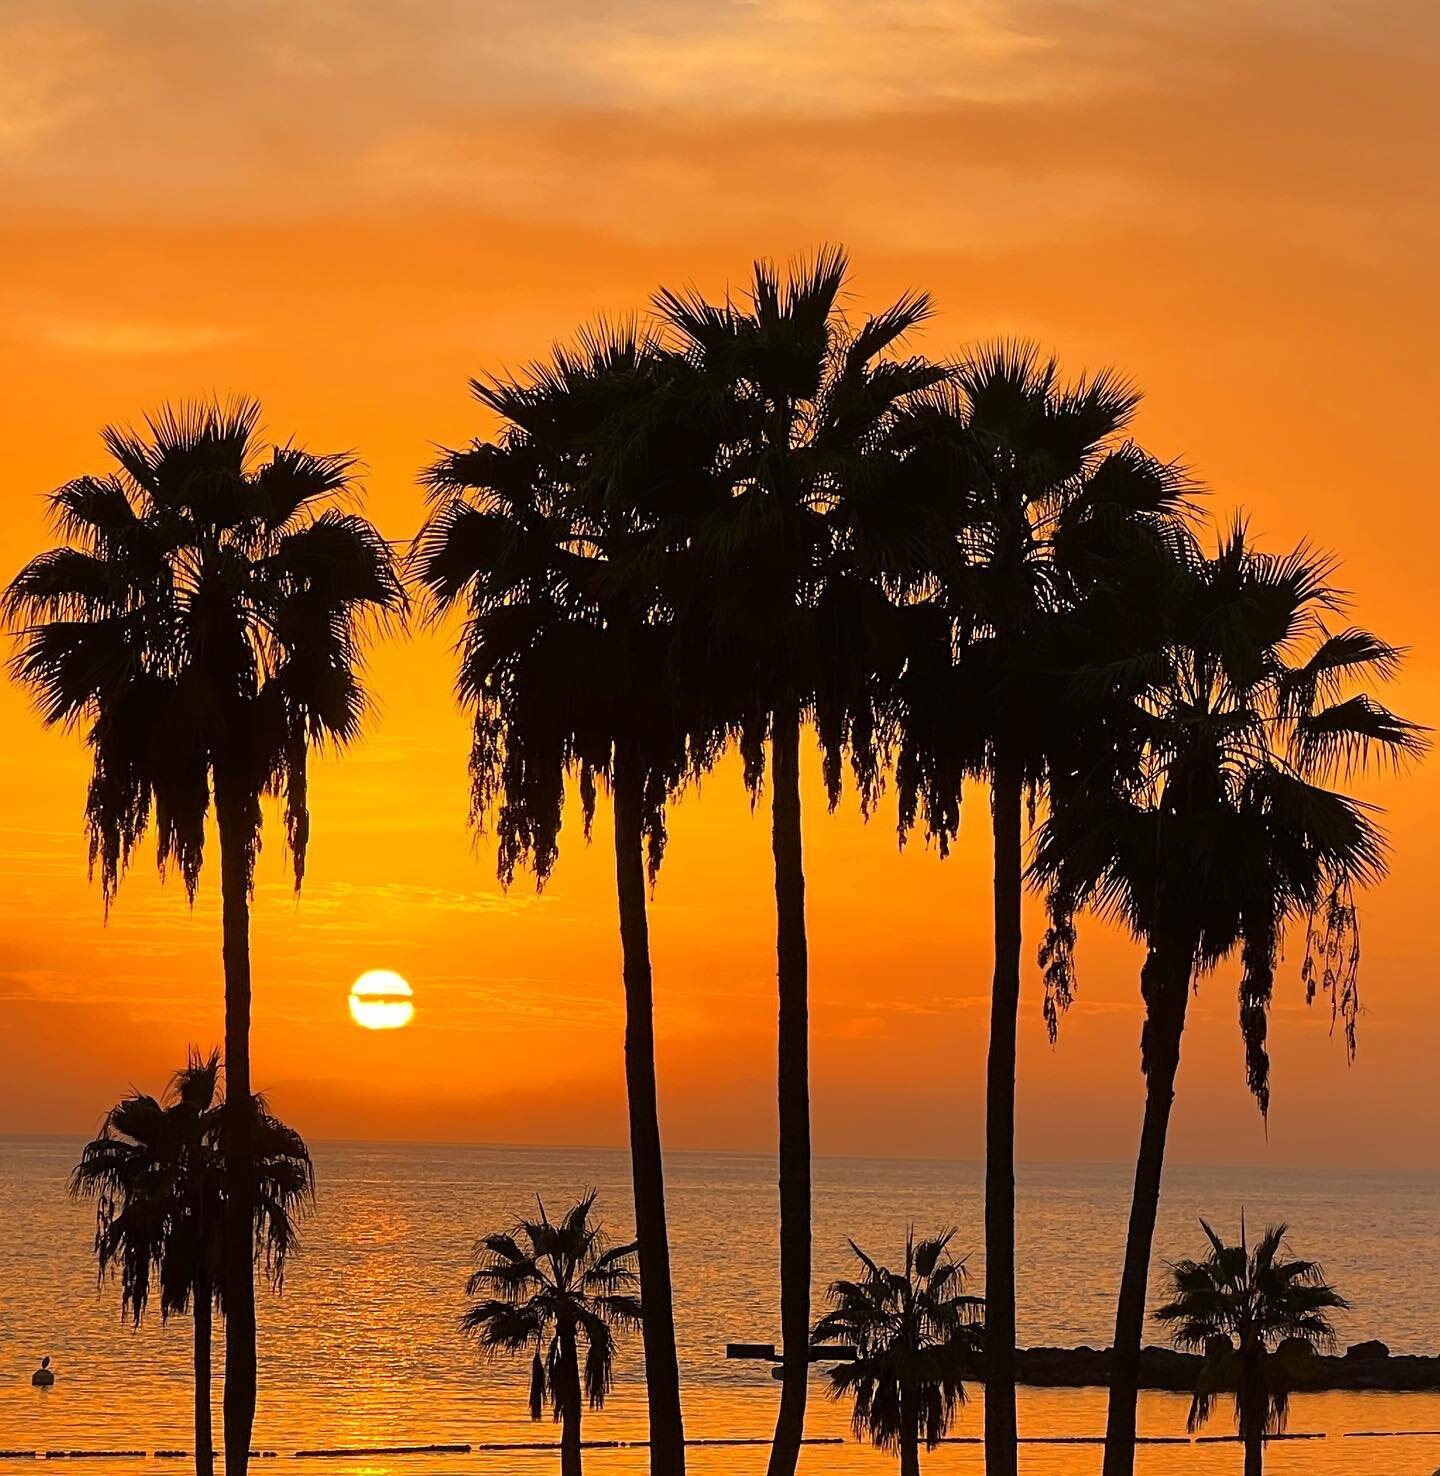 #palmtrees #atlanticocean #beach #sunset #beauty #nature #grancanaria #spain #atardecer #tramonto #soleil #goldenhourphotography